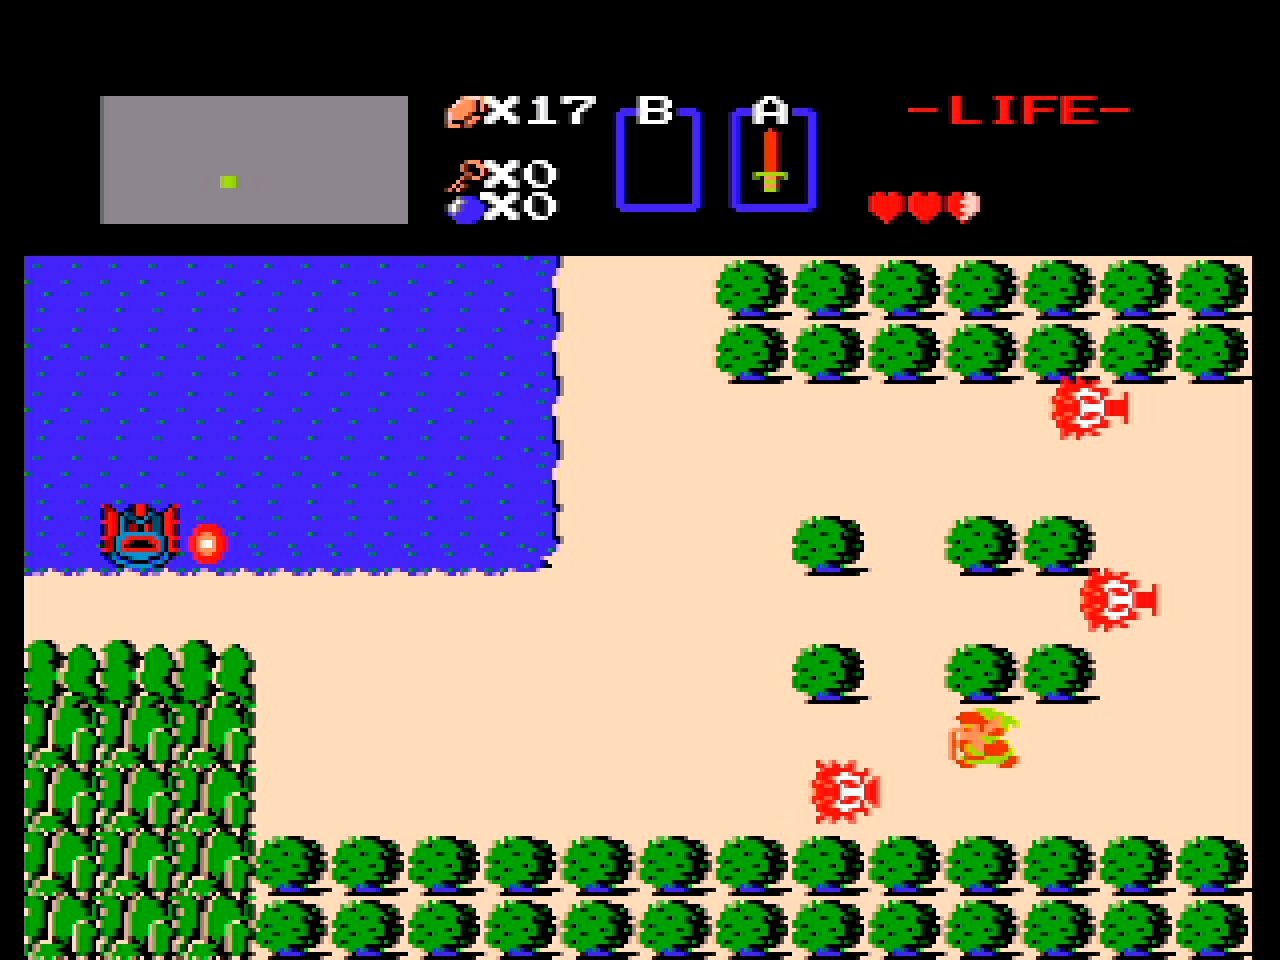  Nintendo Game & Watch : The Legend of Zelda System : Video Games